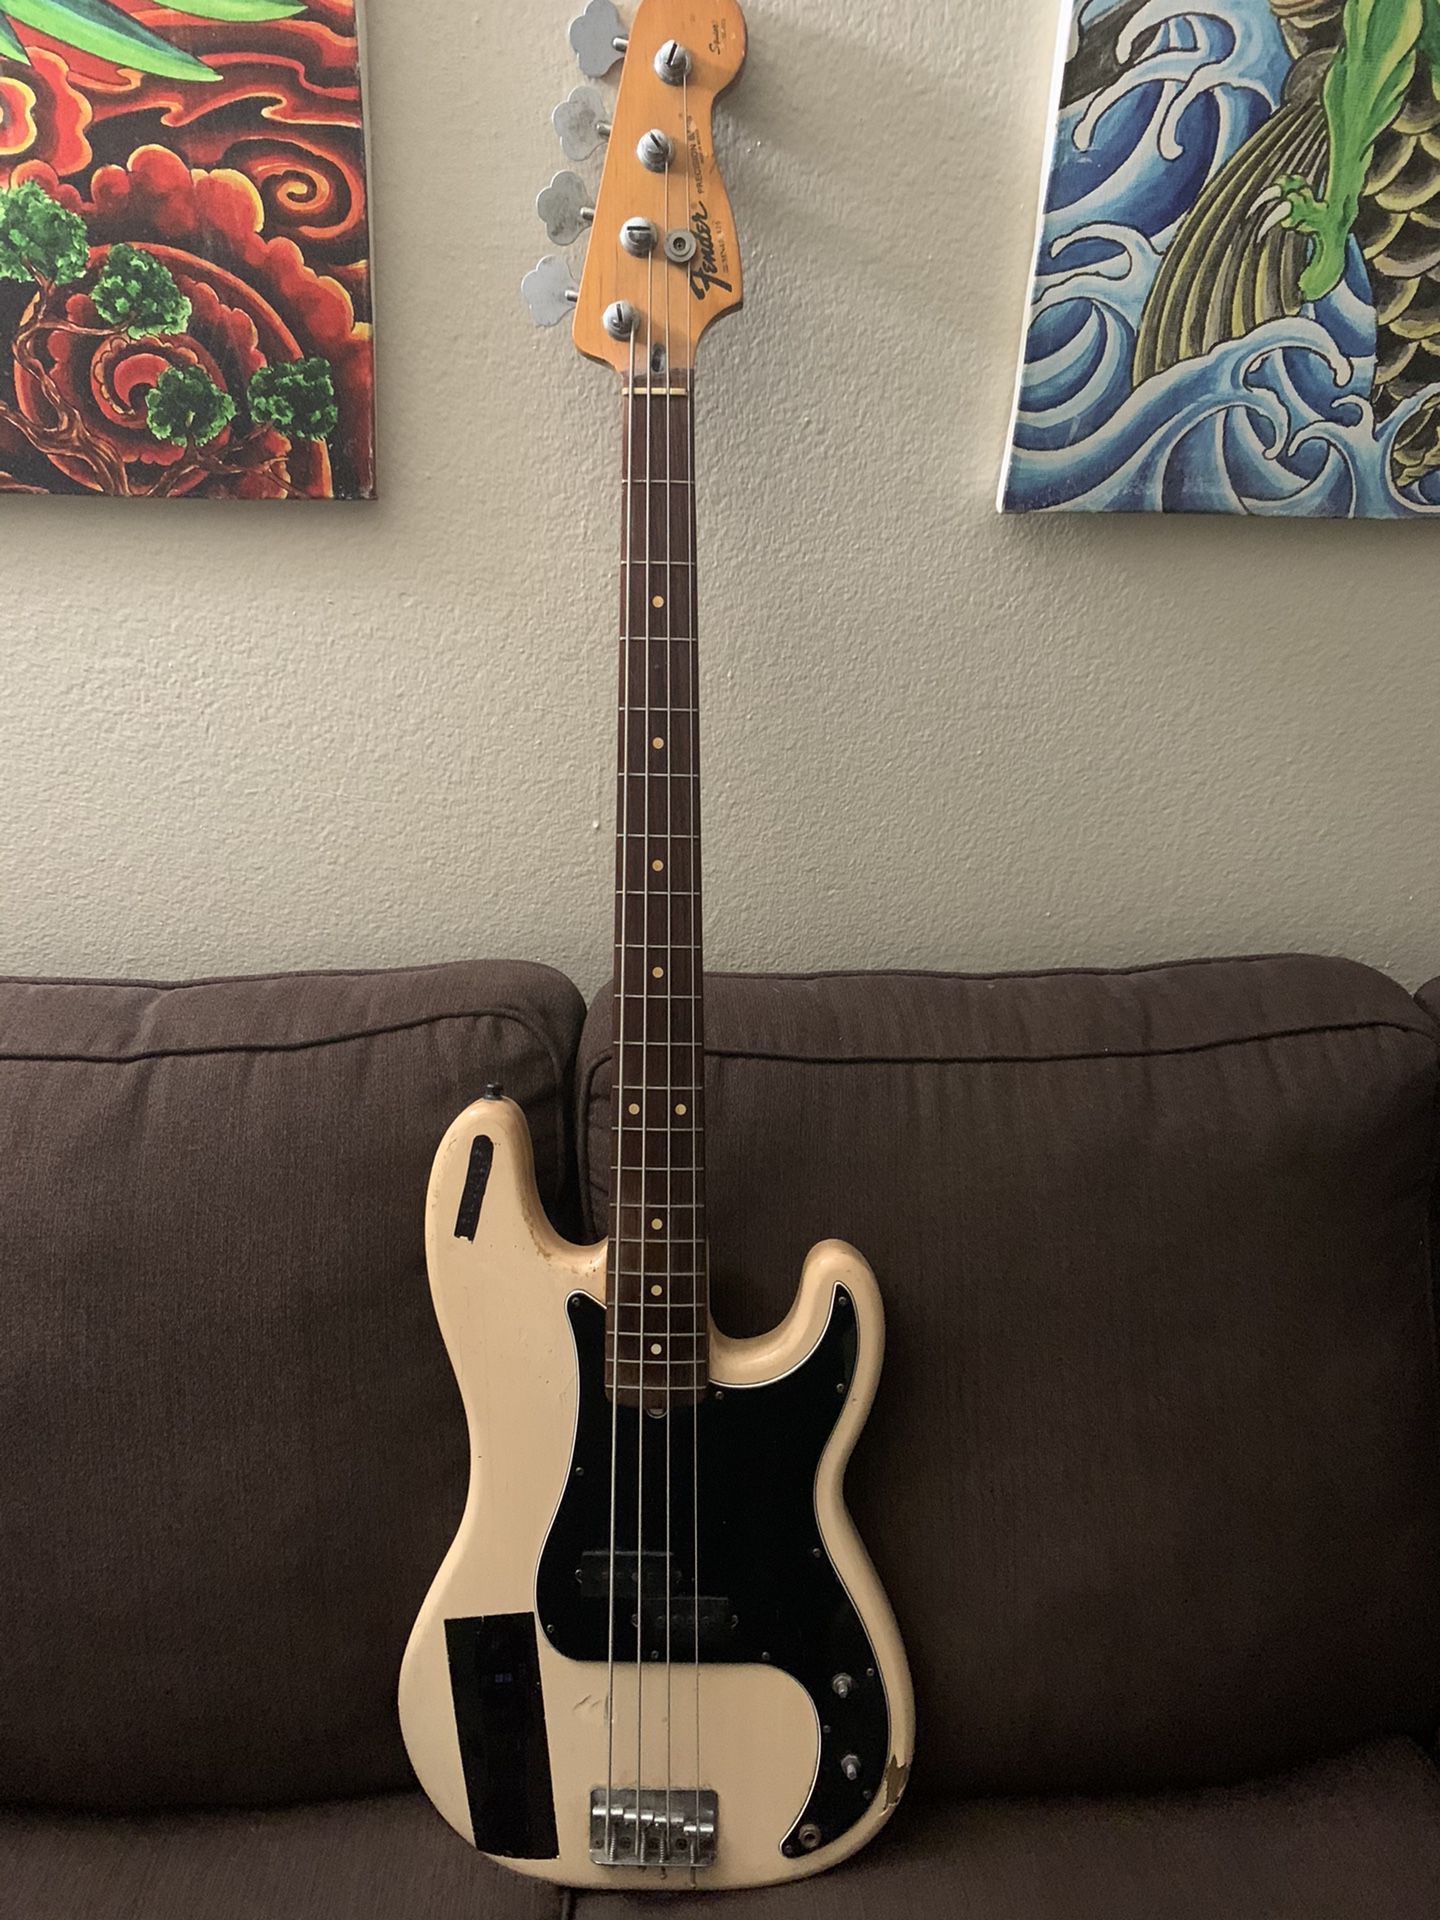 Fender squire bass guitar